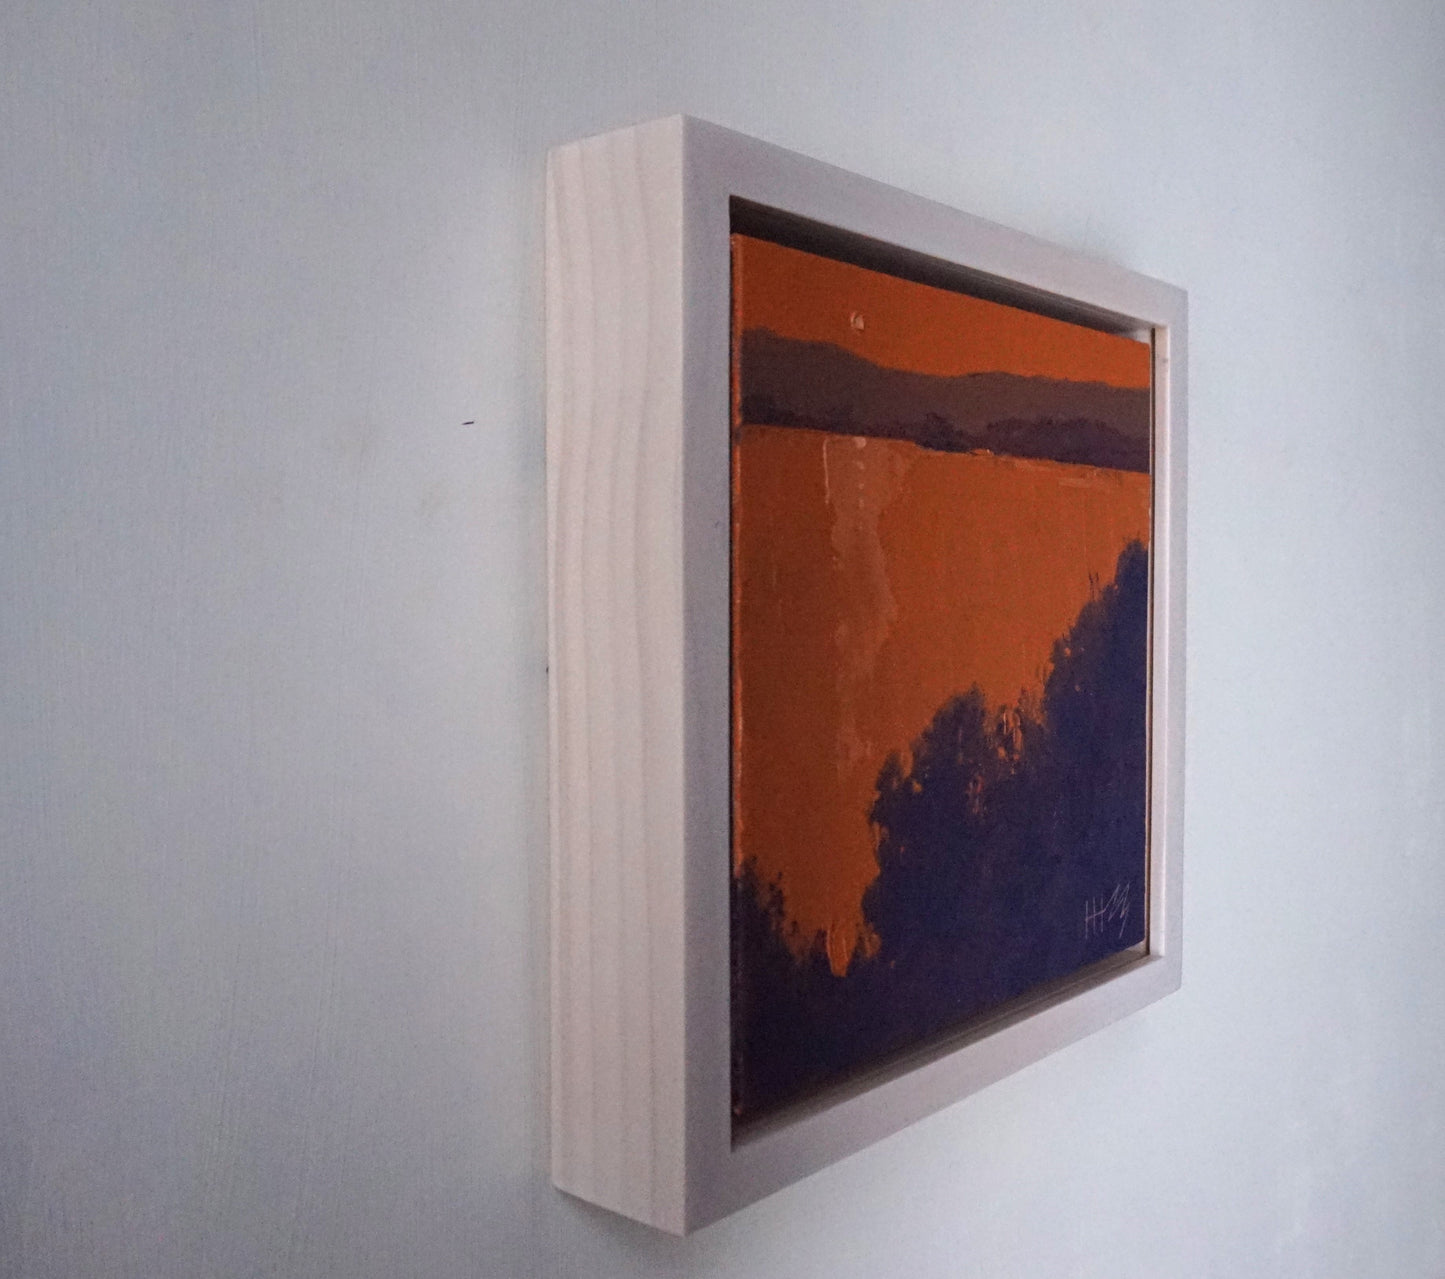 Comfort at sundown- 18x18cm / Oil painting on canvas panel